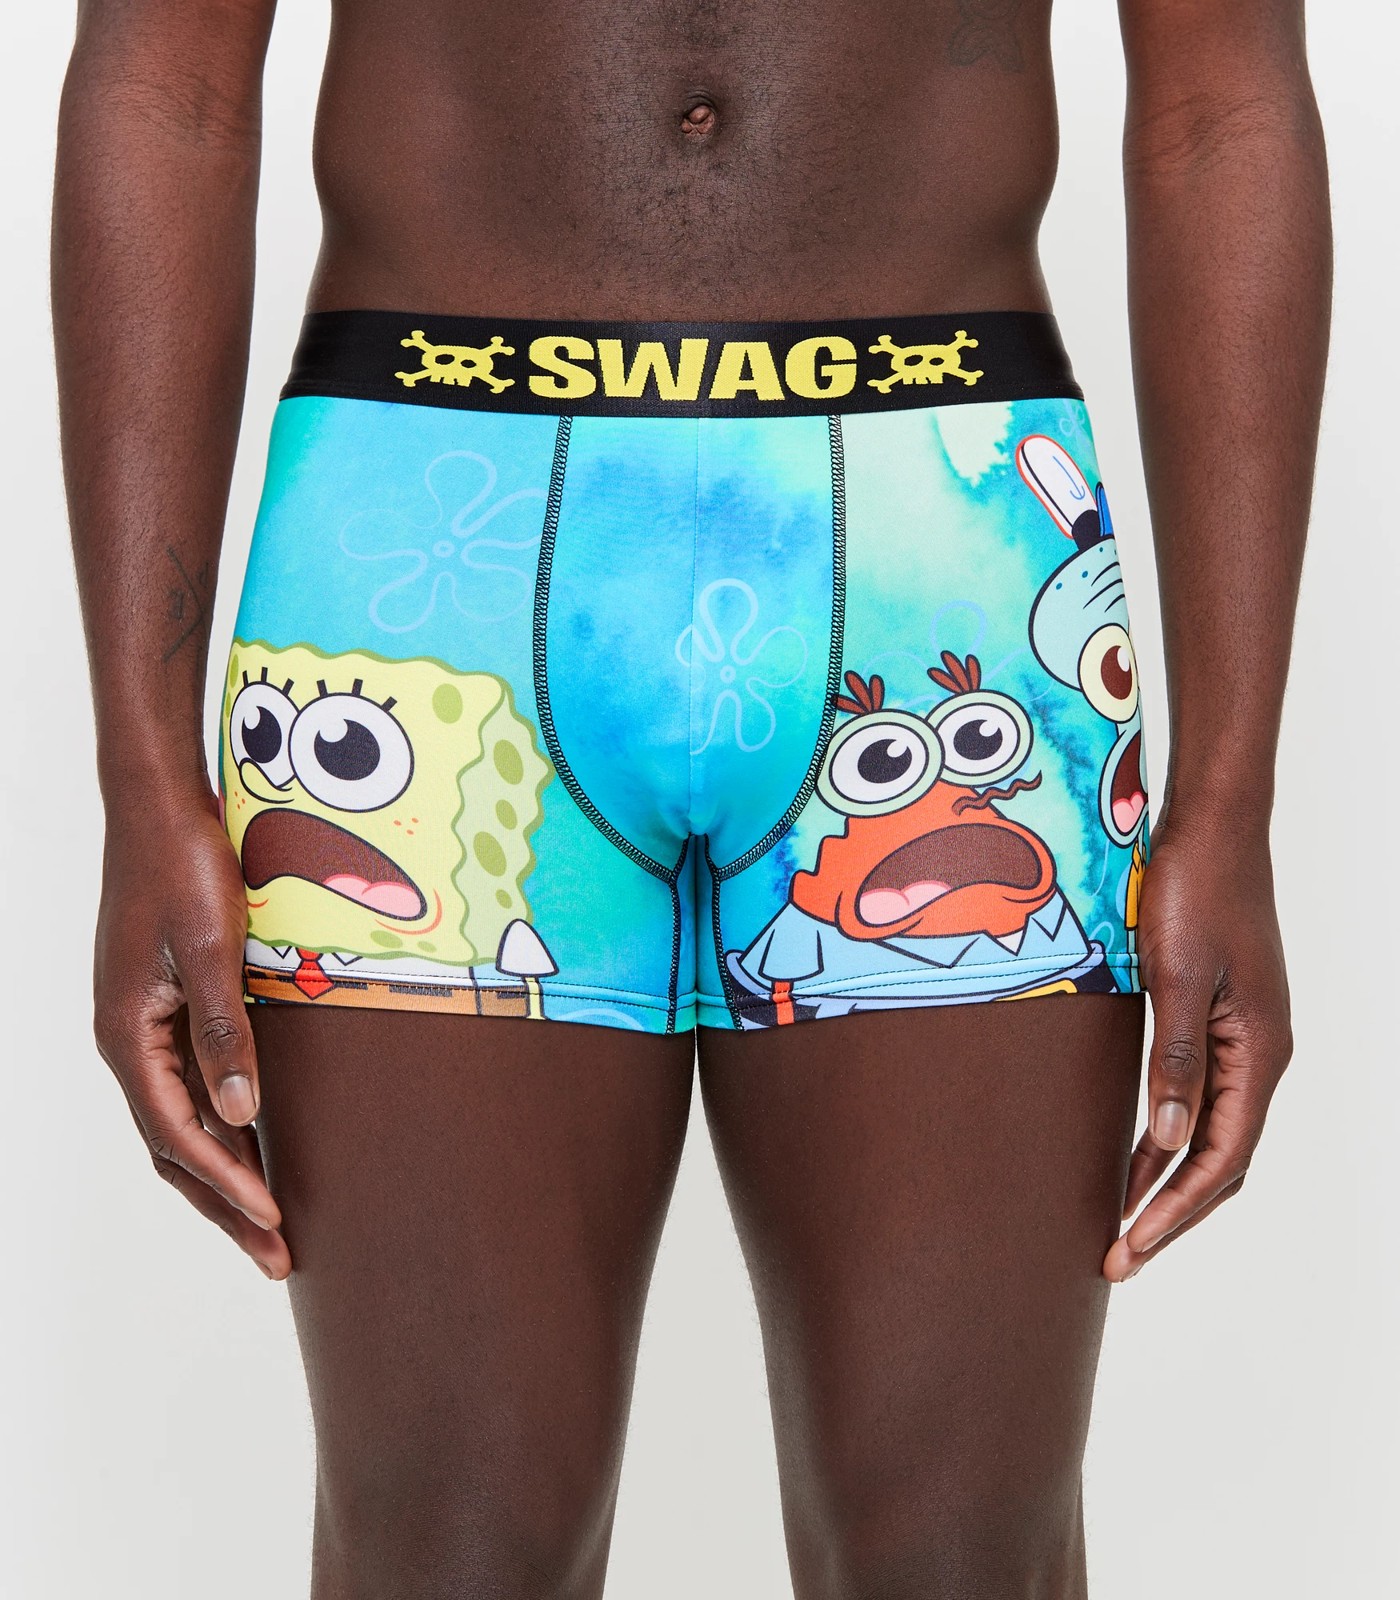 Spongebob Boxer Shorts Men, Spongebob Squarepants Boxers